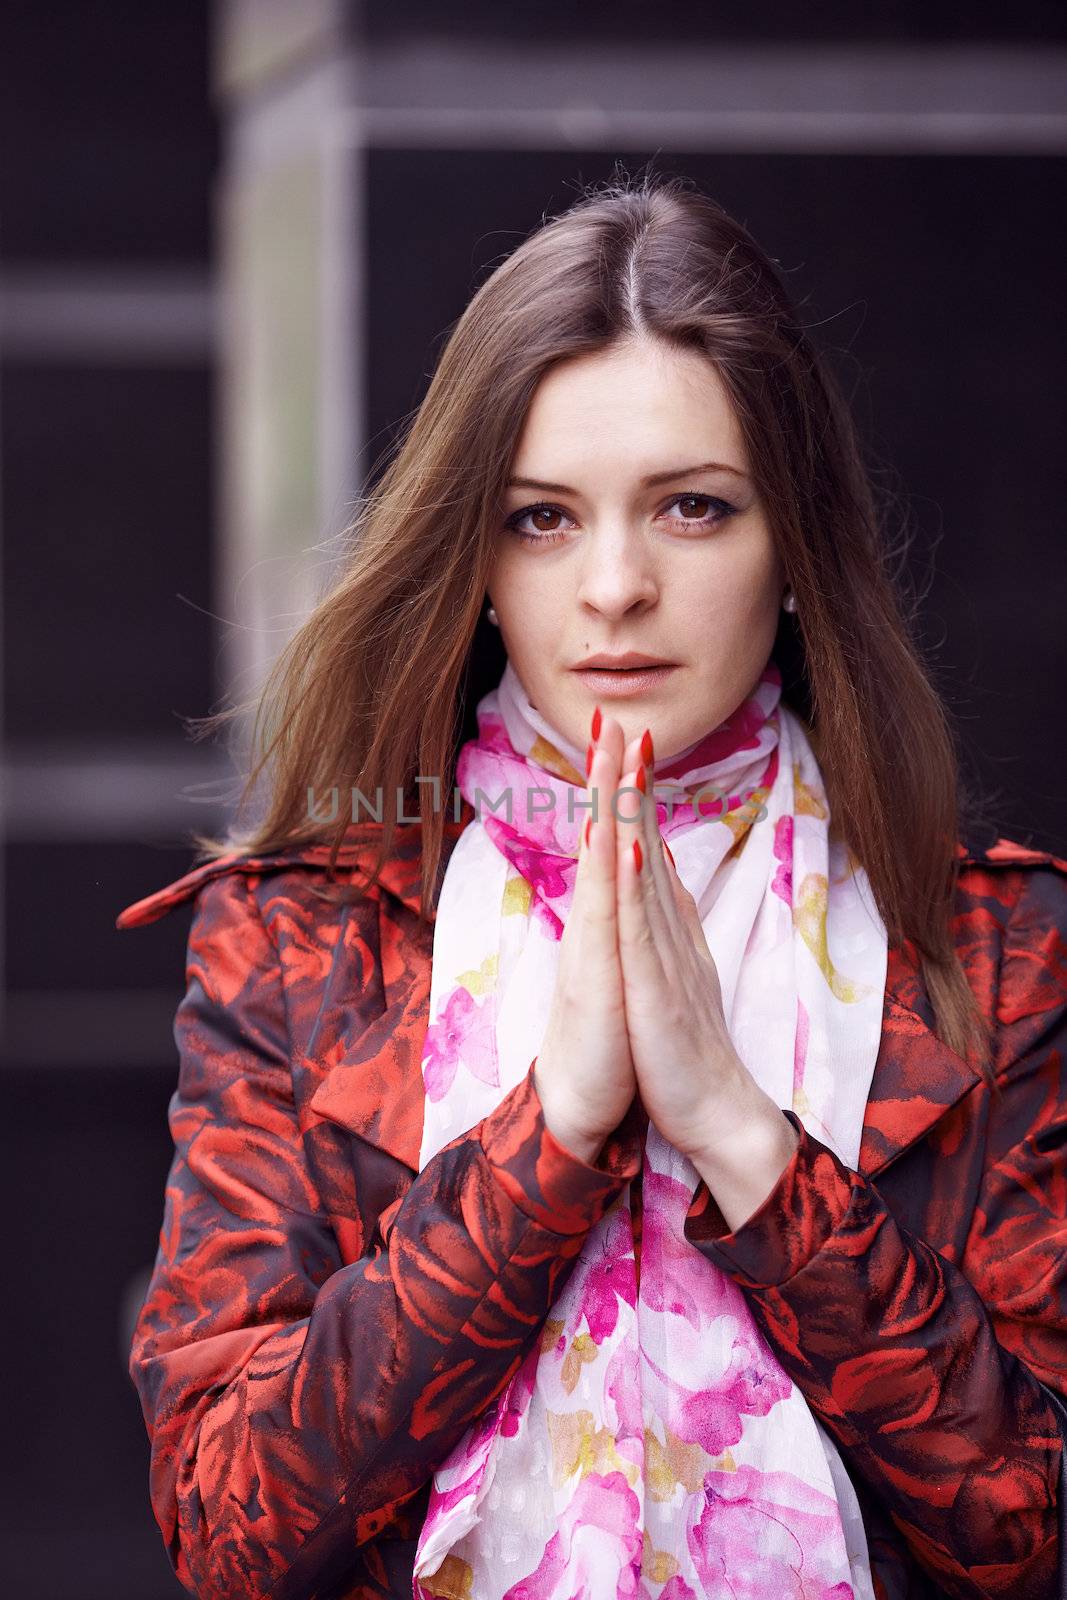 Beautiful girl in a red cloak praying